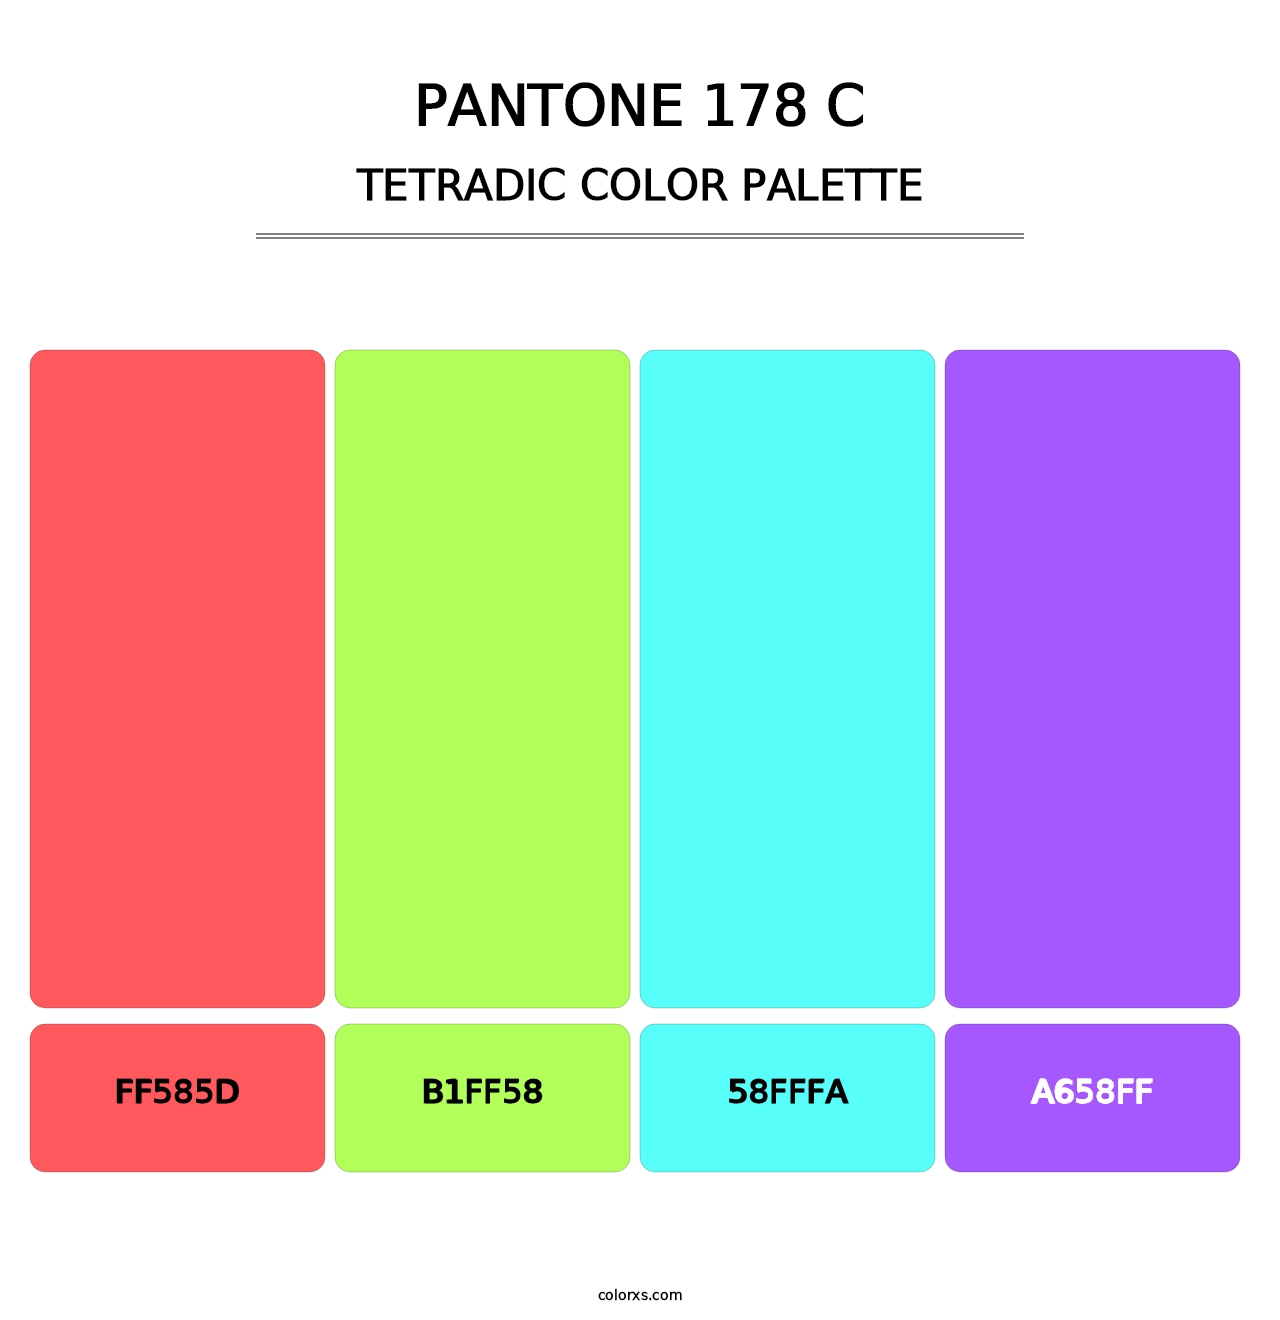 PANTONE 178 C - Tetradic Color Palette